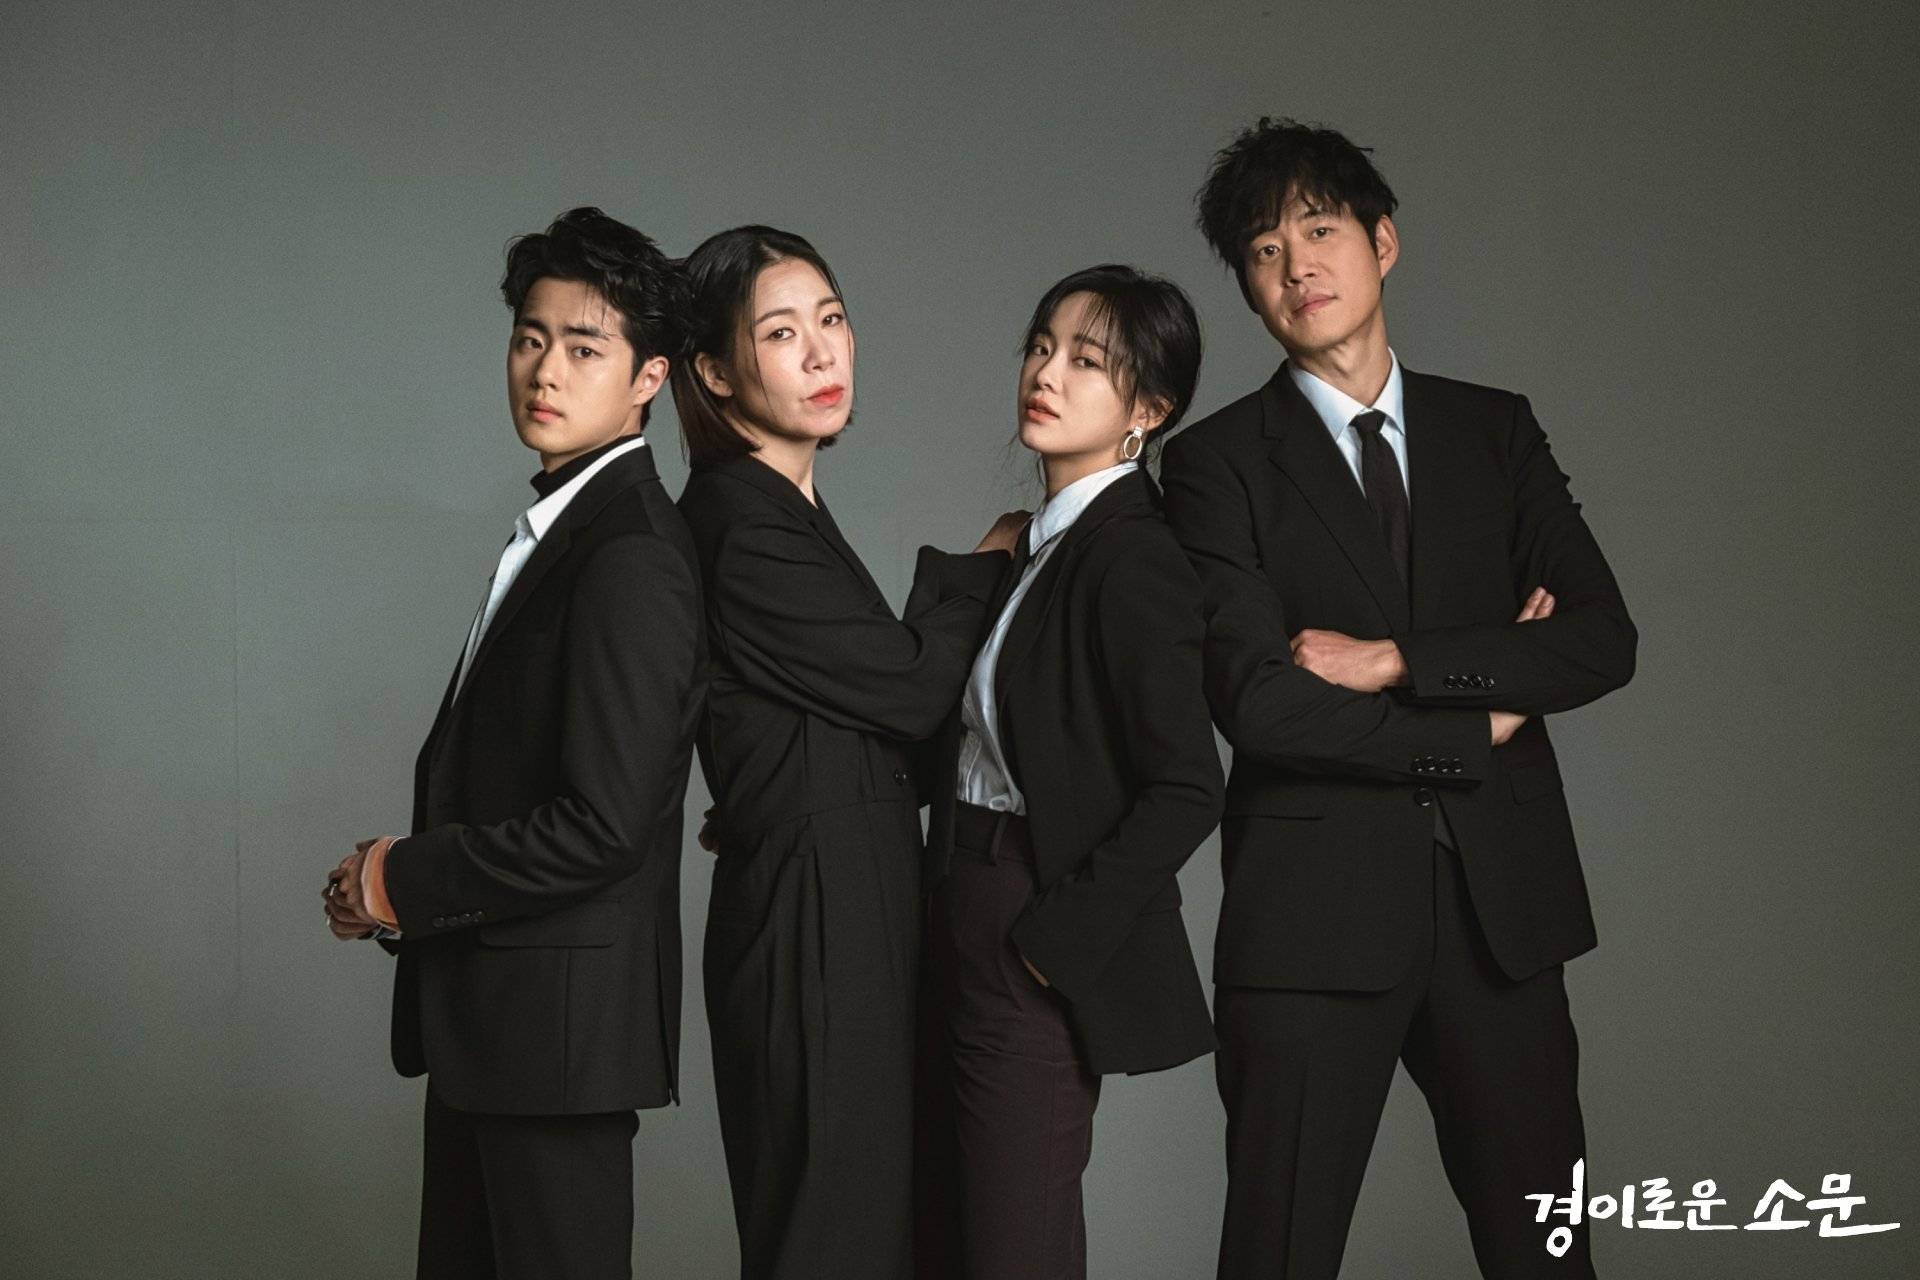 Photos Cast Photoshoot Added For The Korean Drama The Uncanny Counter Hancinema 6220